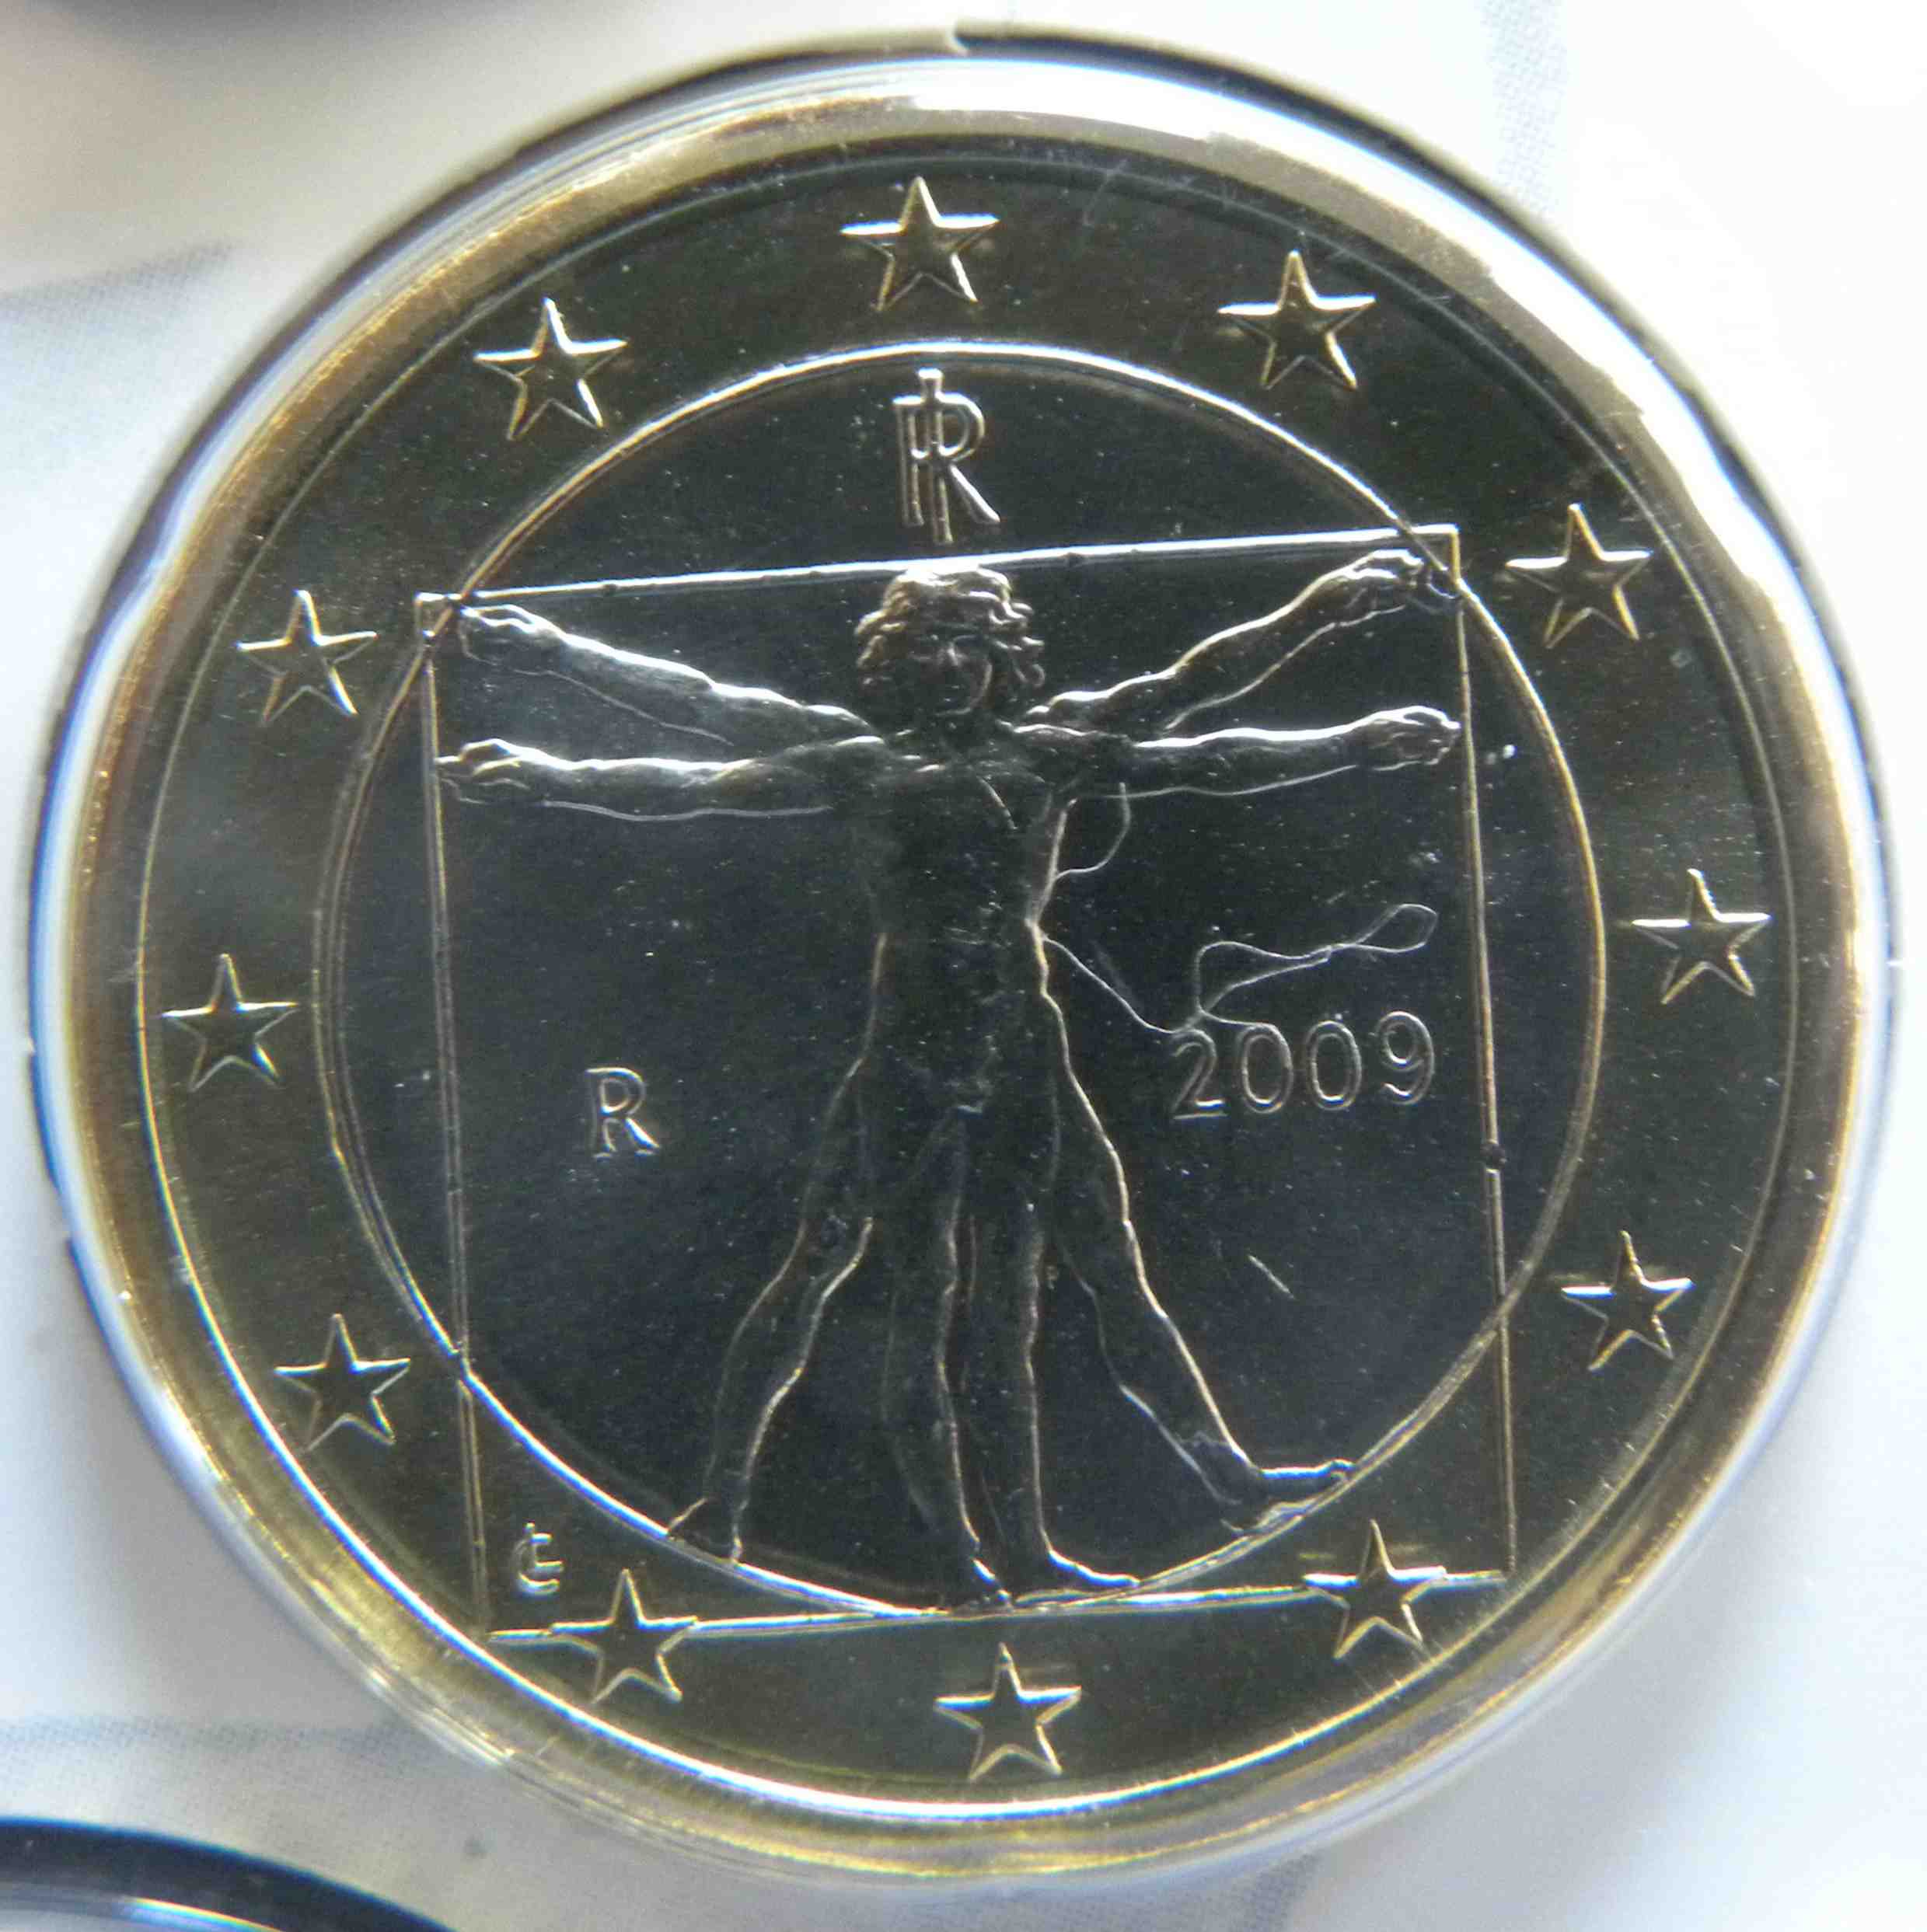 Italien 1 Euro Münze 2009 - euro-muenzen.tv - Der Online Euromünzen Katalog